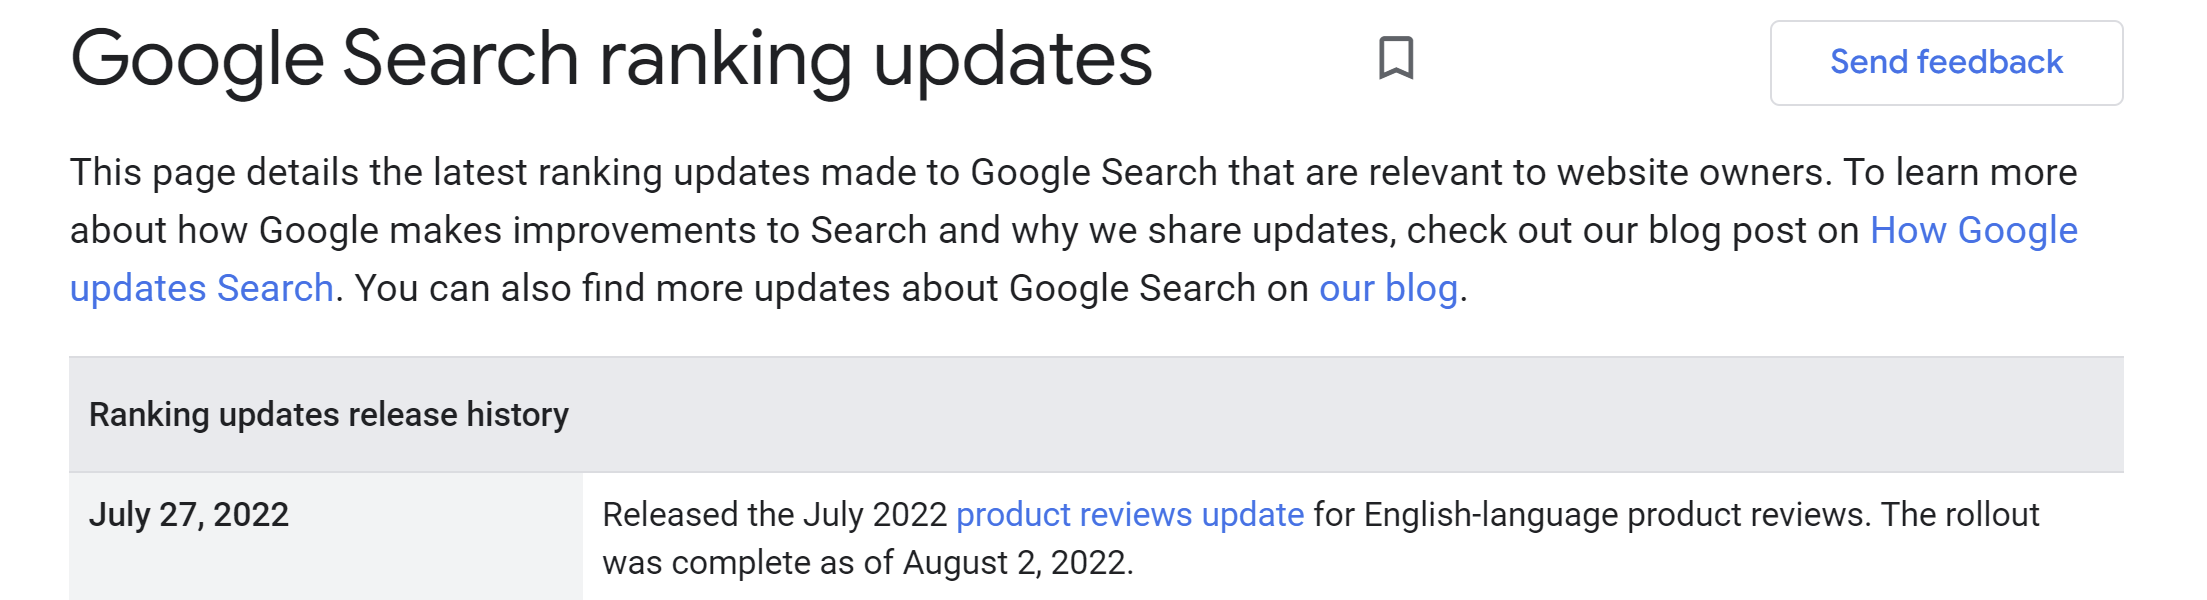 Google verkündet das July 2022 Product Reviews Update für beendet